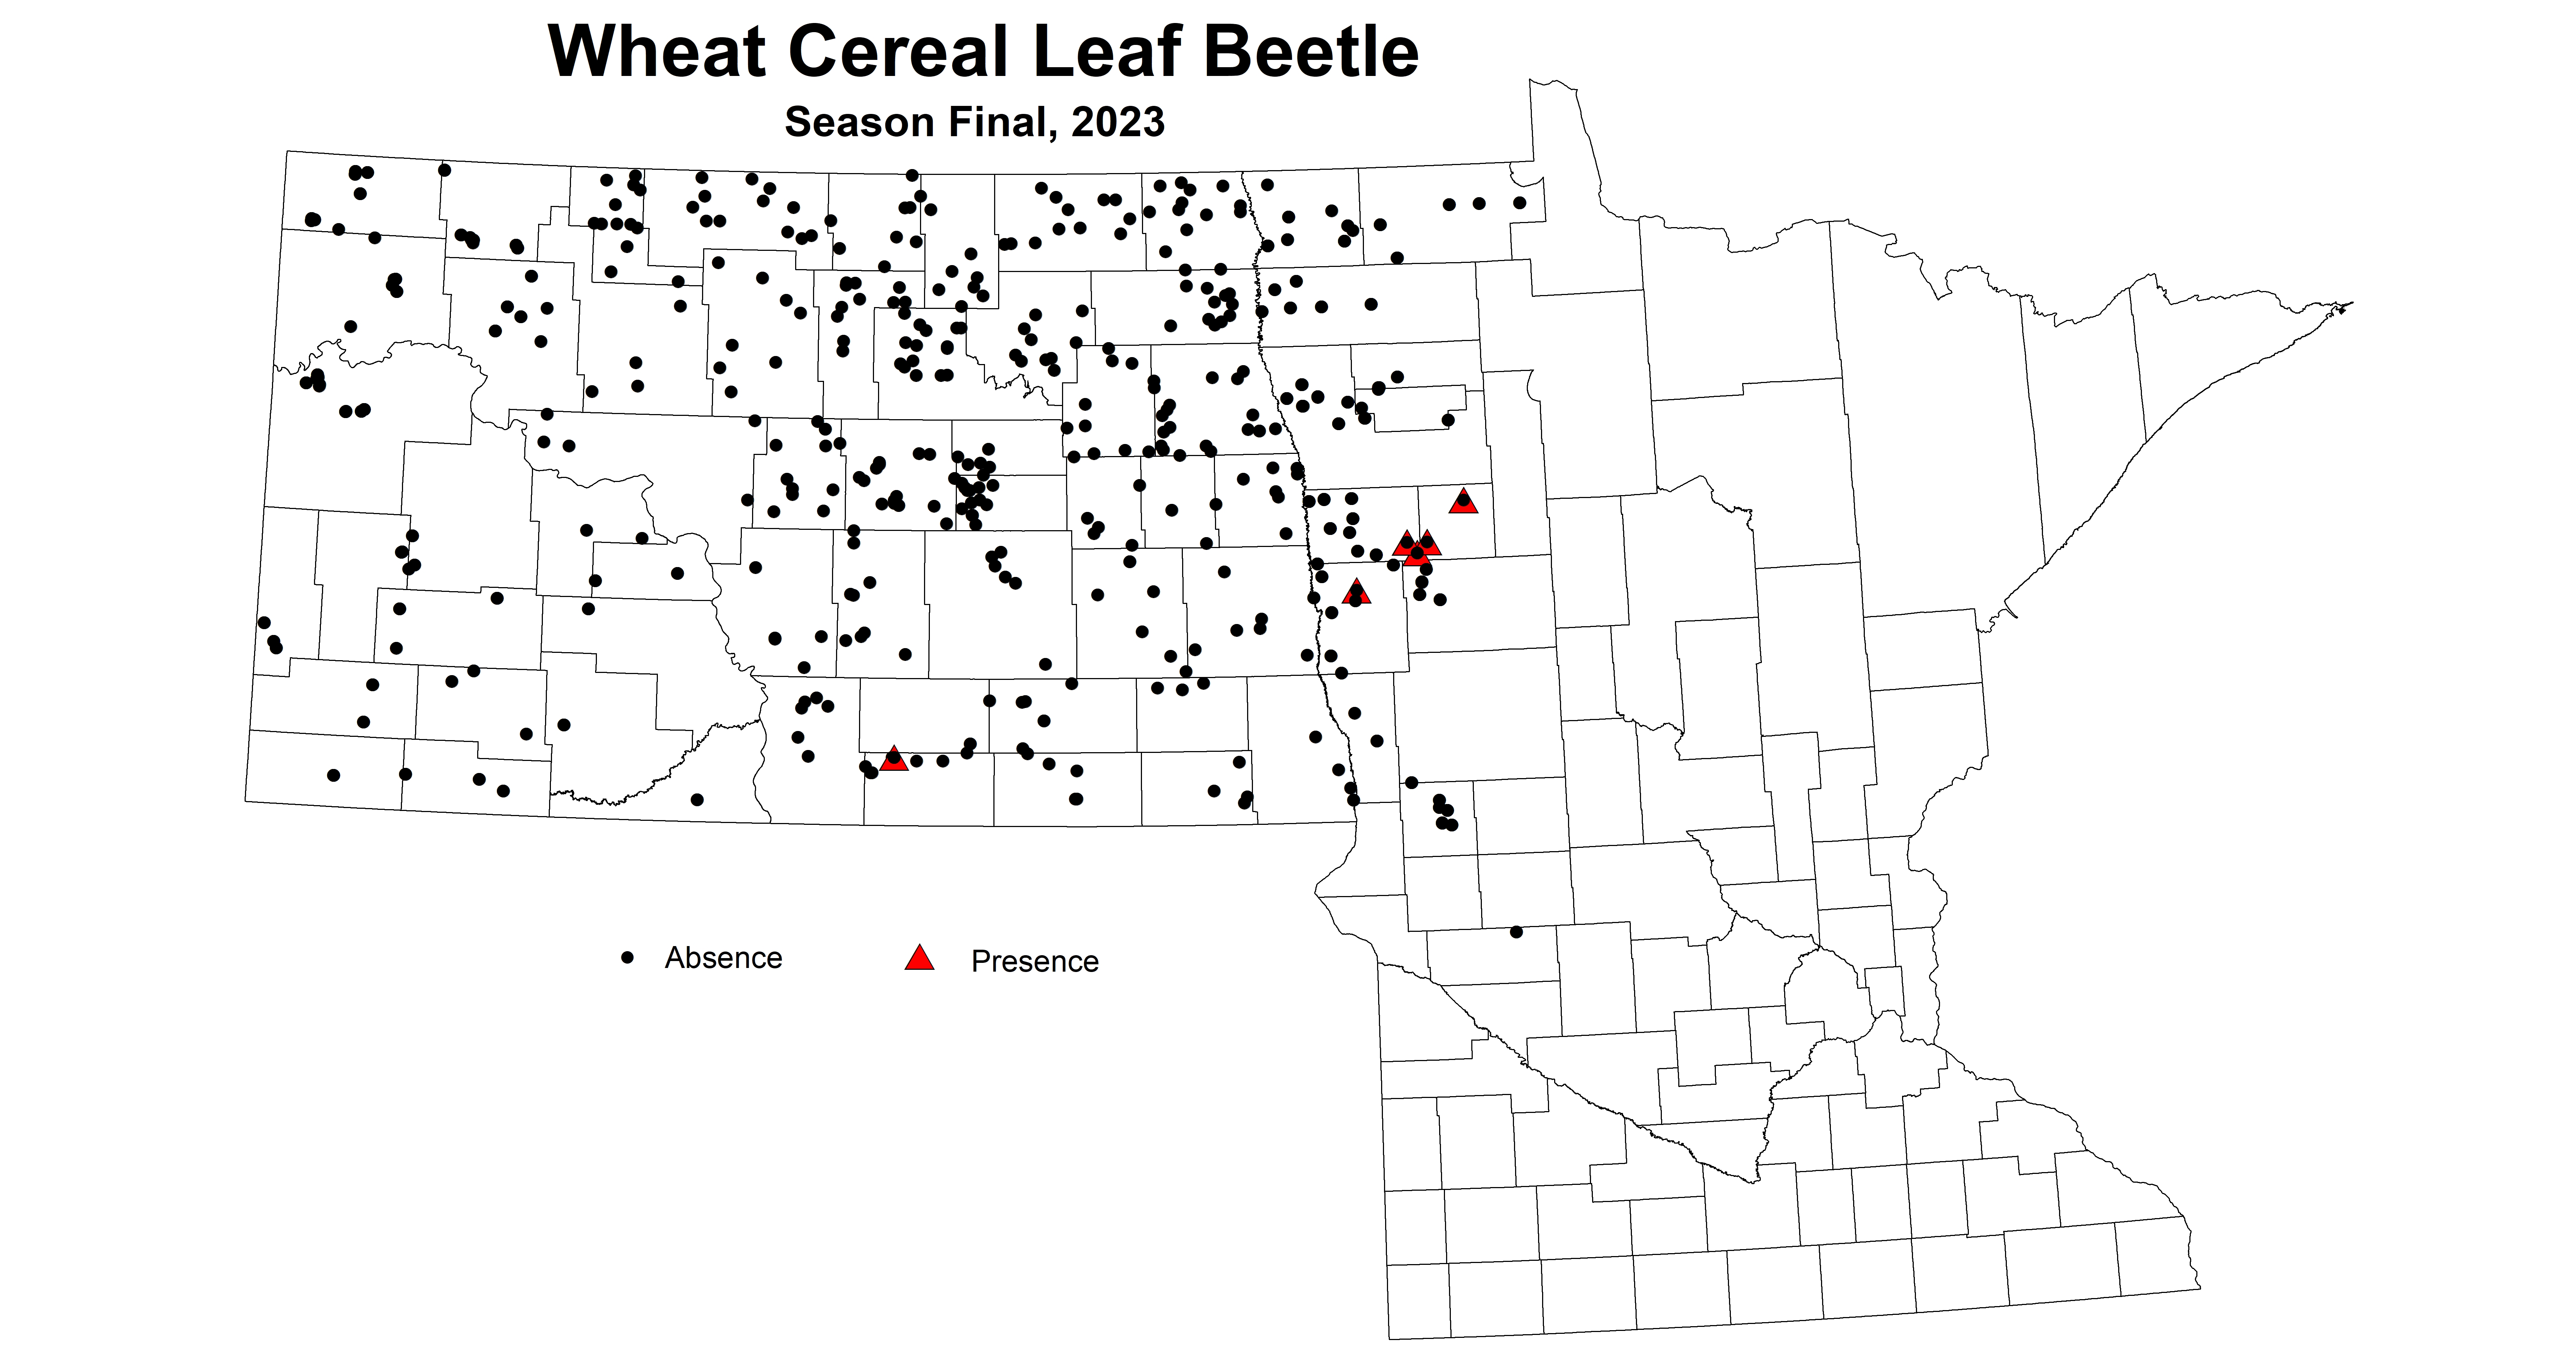 wheat cereal leaf beetle season final 2023